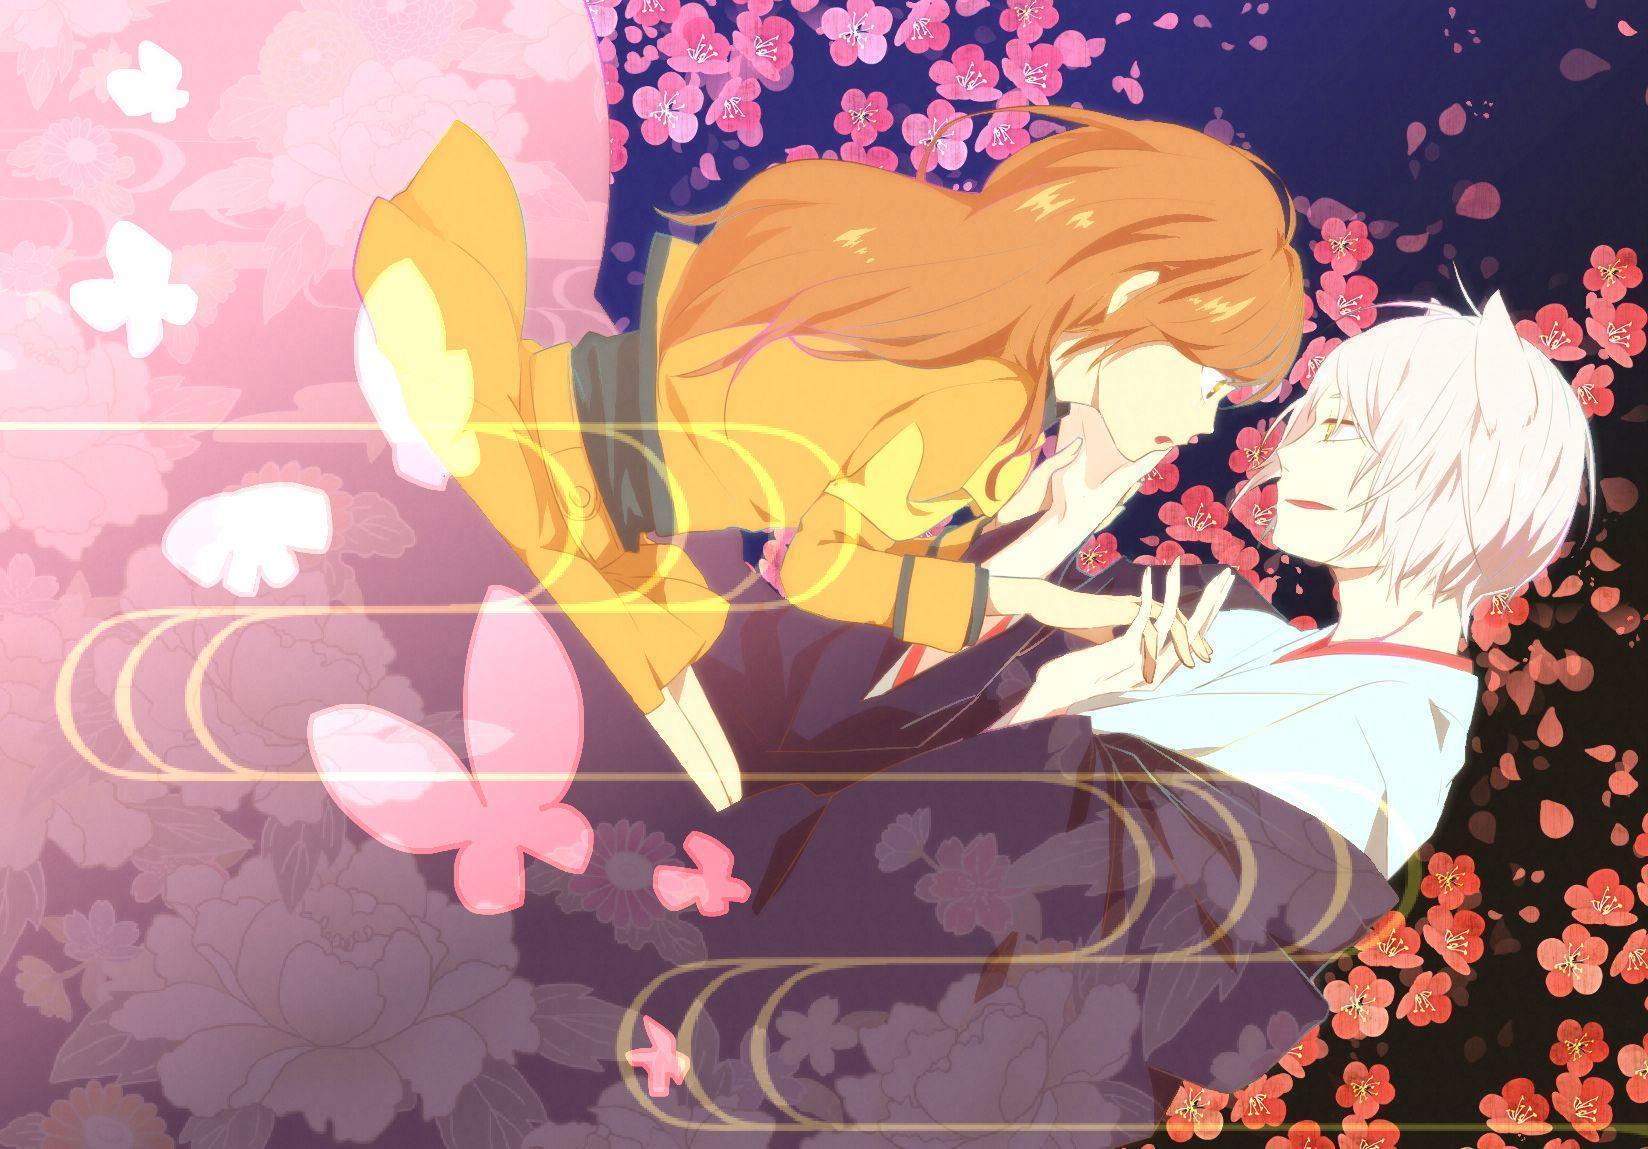 Kamisama Hajimemashita (Kamisama Kiss) Anime Image Board